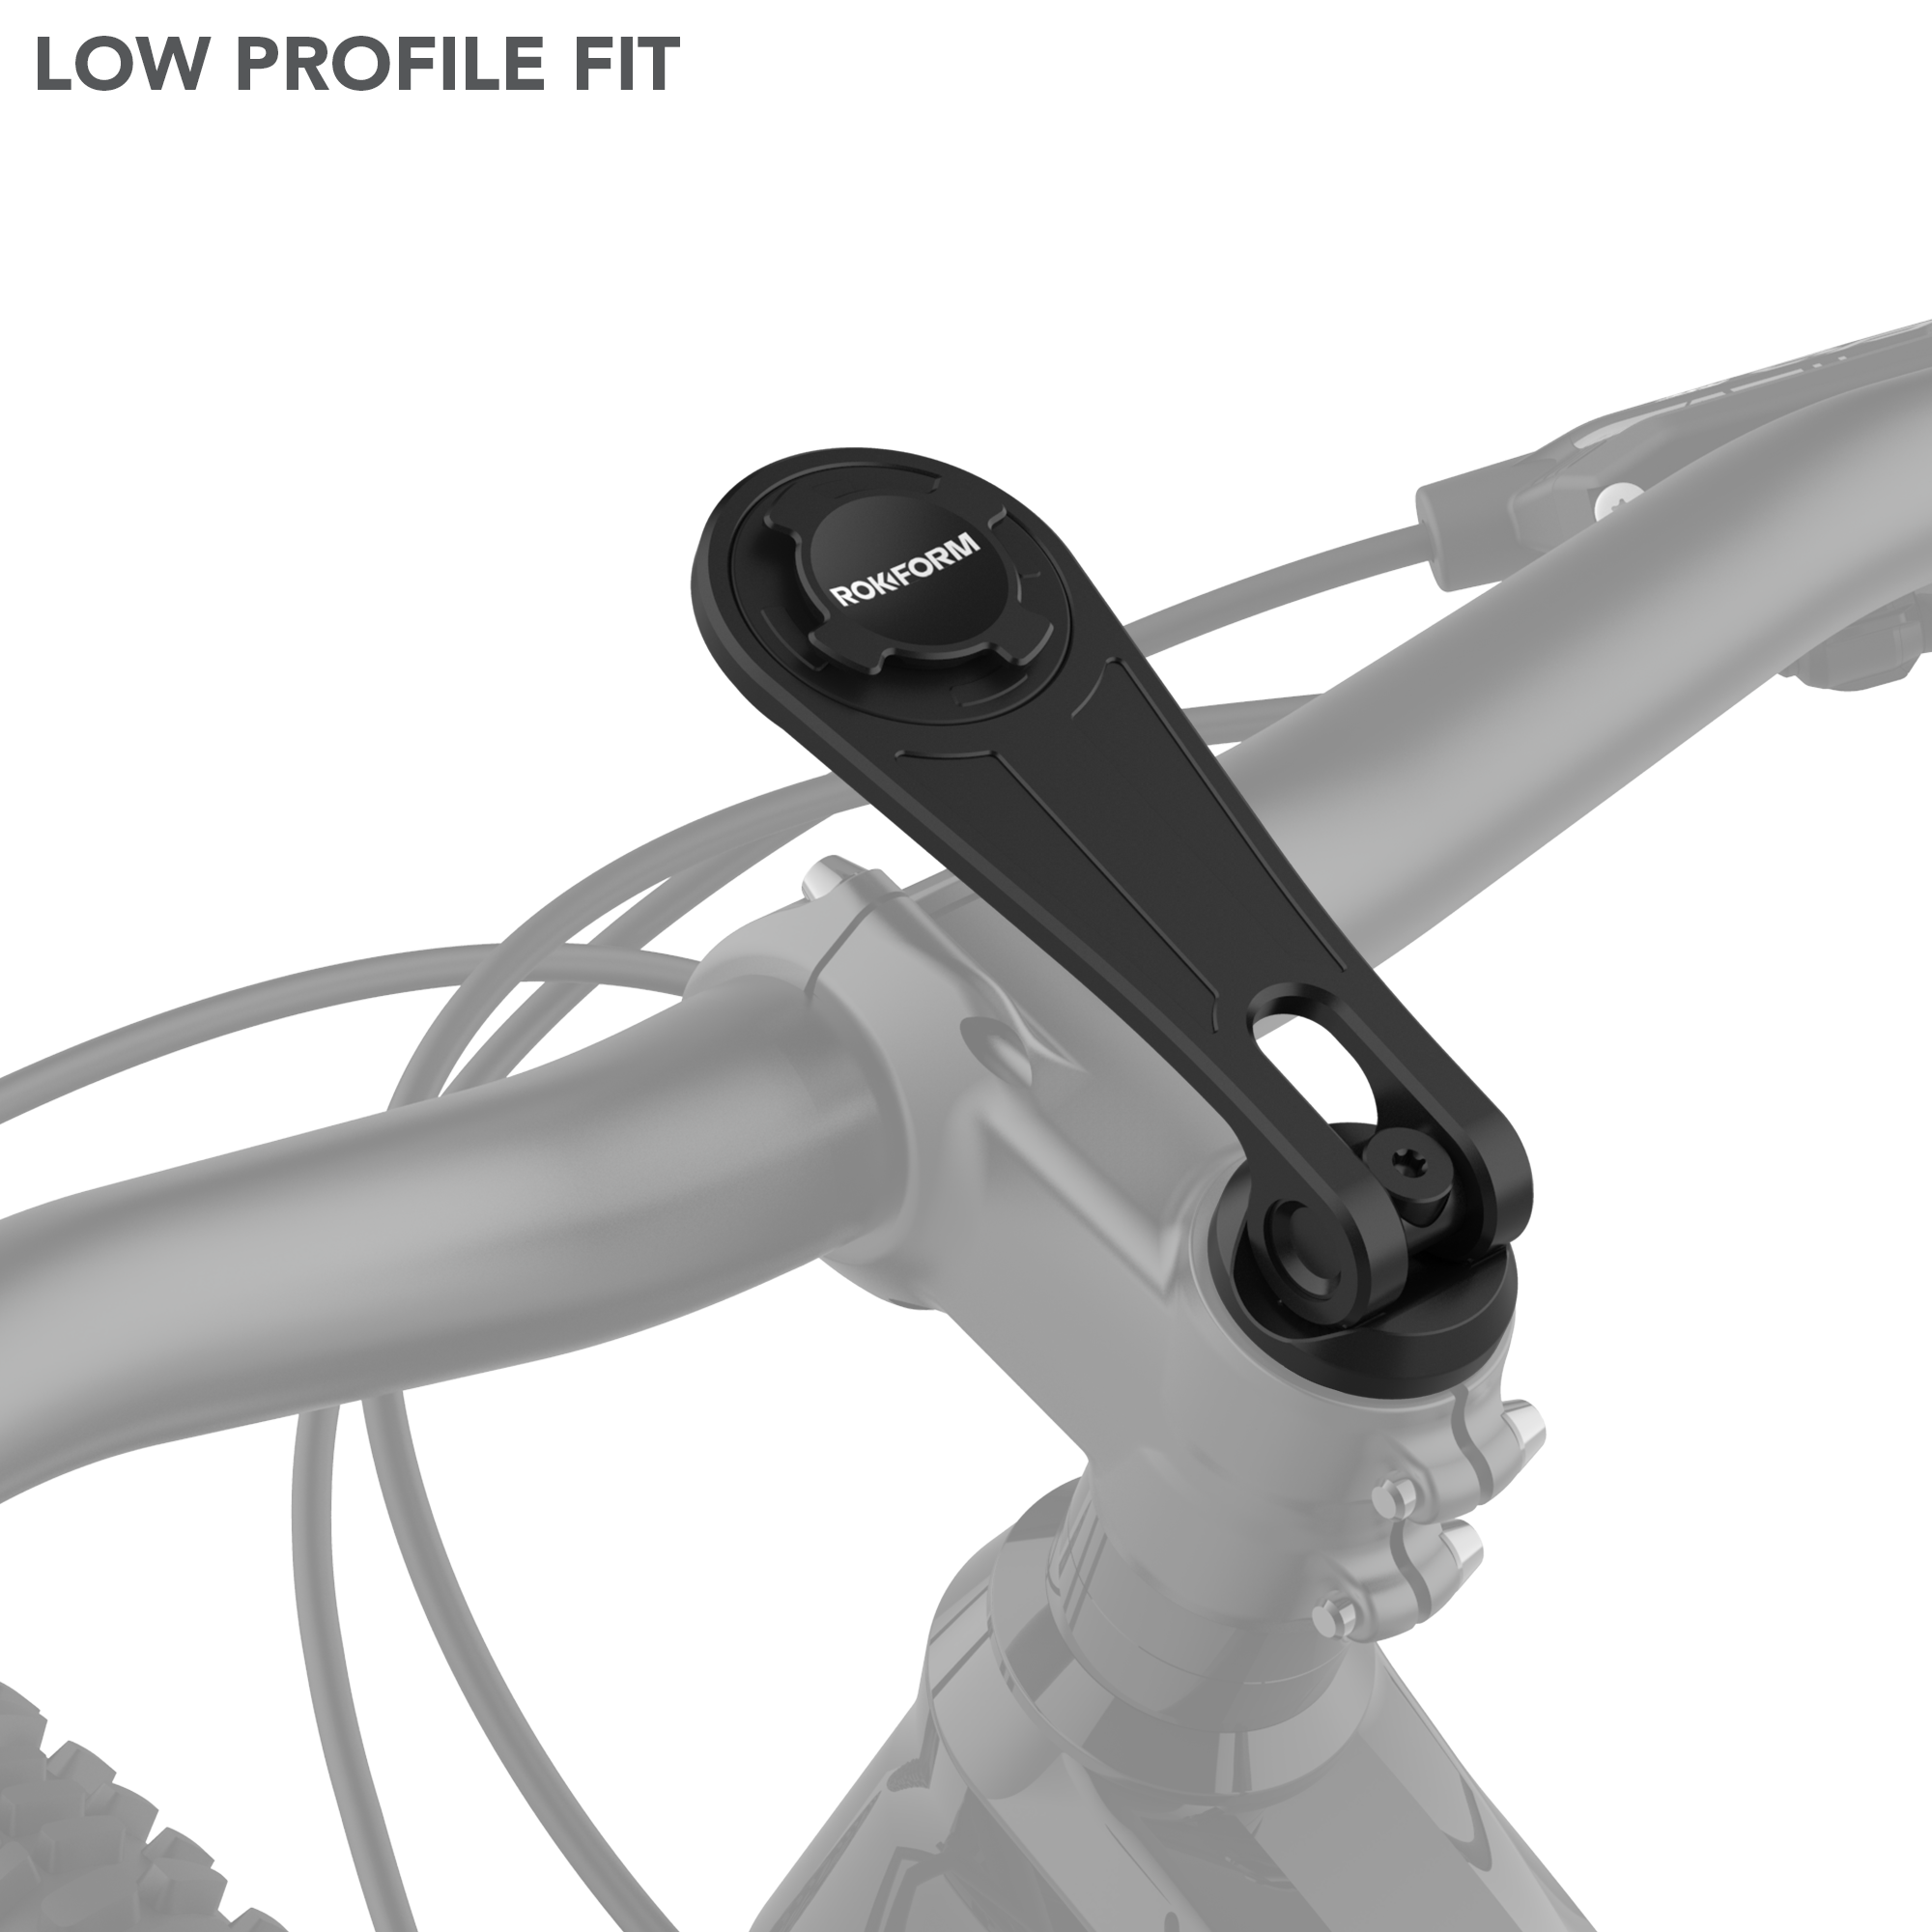 Hands On Bike: Quad Lock Phone Mount - Galaxy S8 Bike Kit